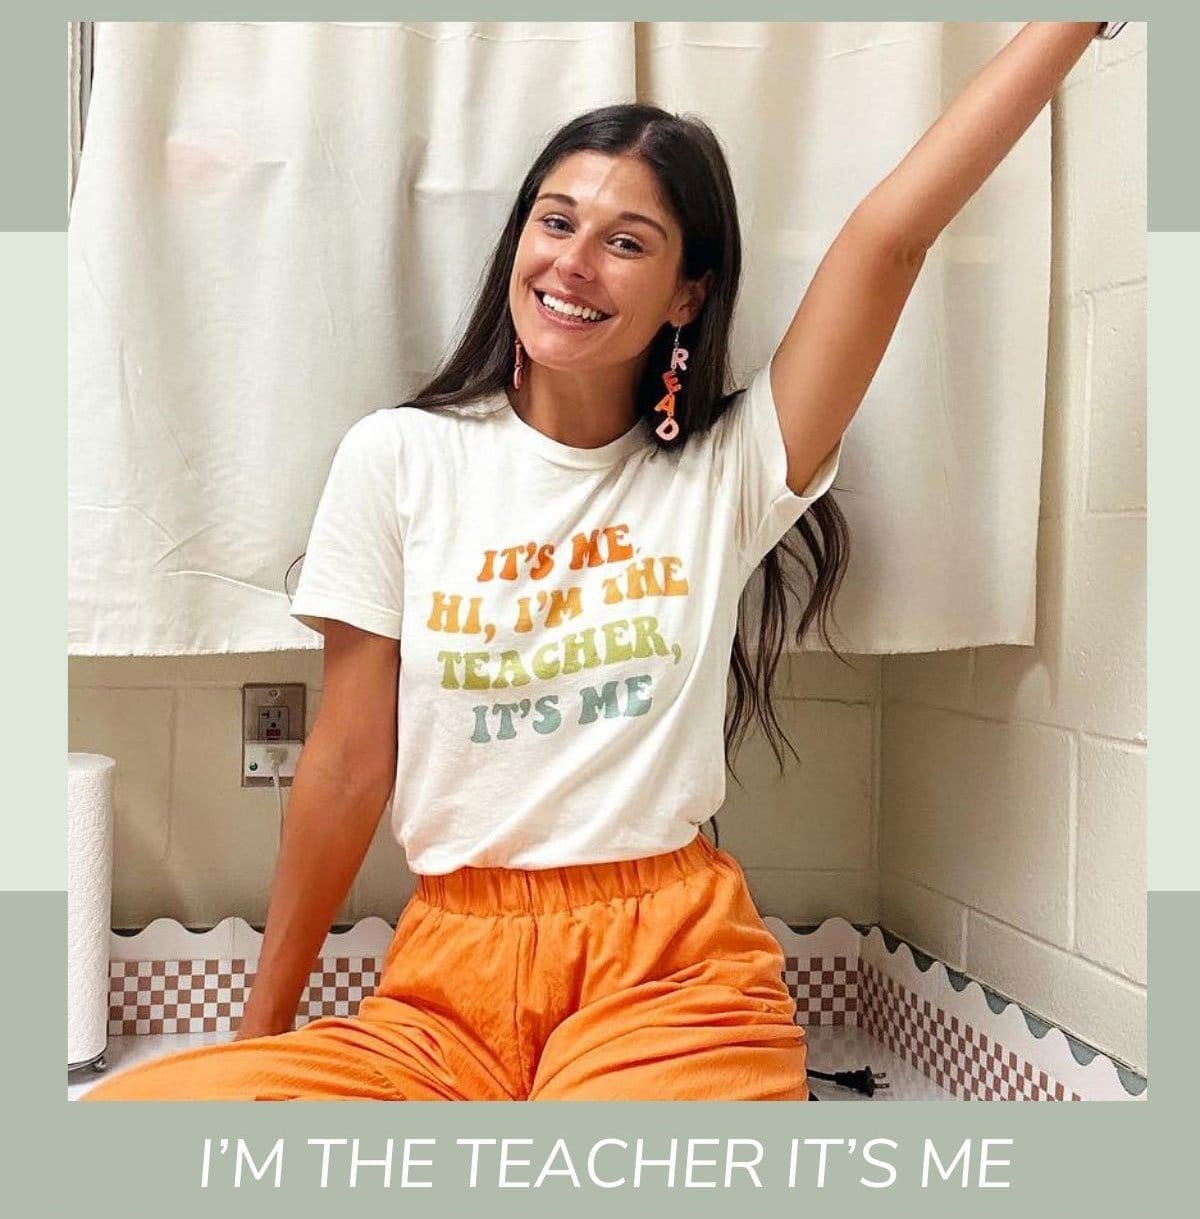 I'm the teacher it's me